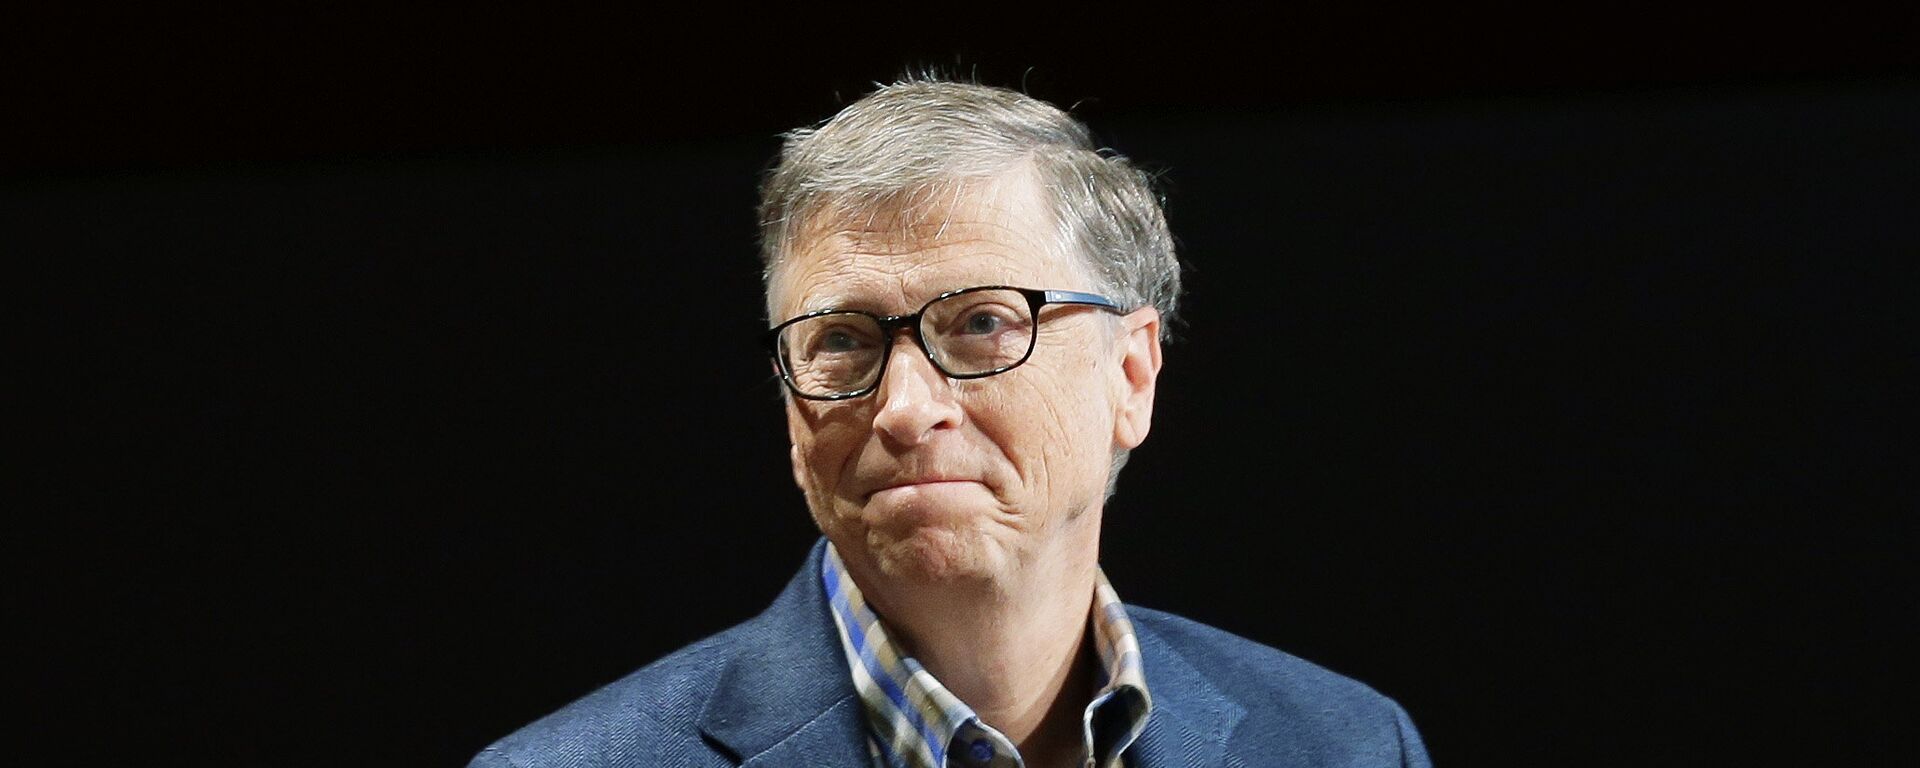 Bill Gates, cofundador de Microsoft  - Sputnik Mundo, 1920, 20.11.2020